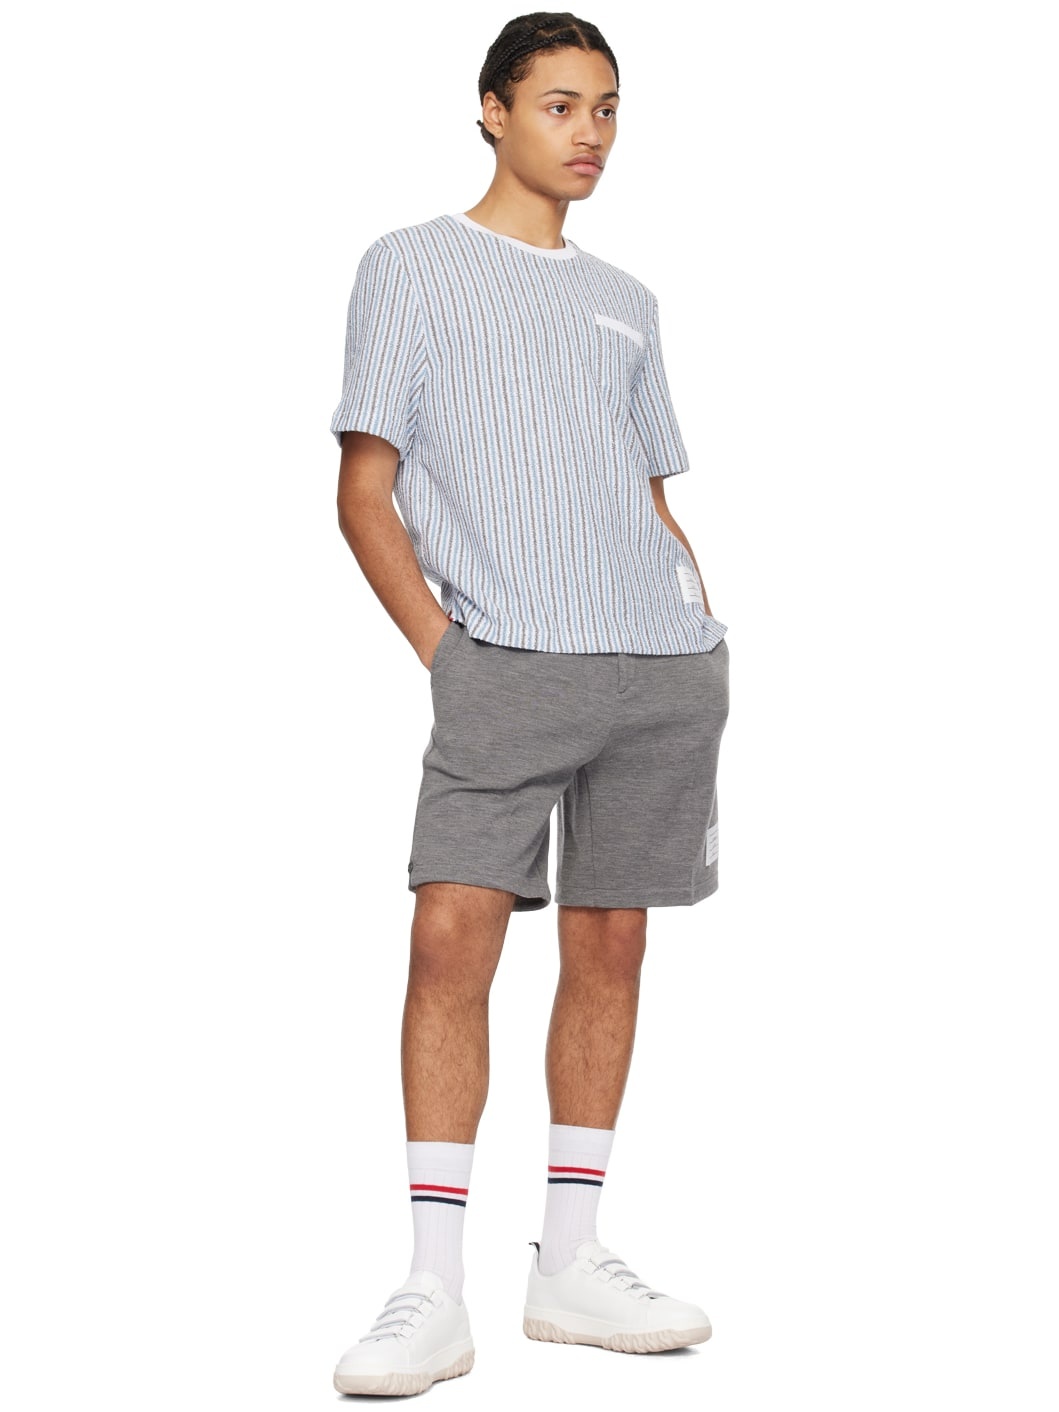 Blue & Gray Striped T-Shirt - 4